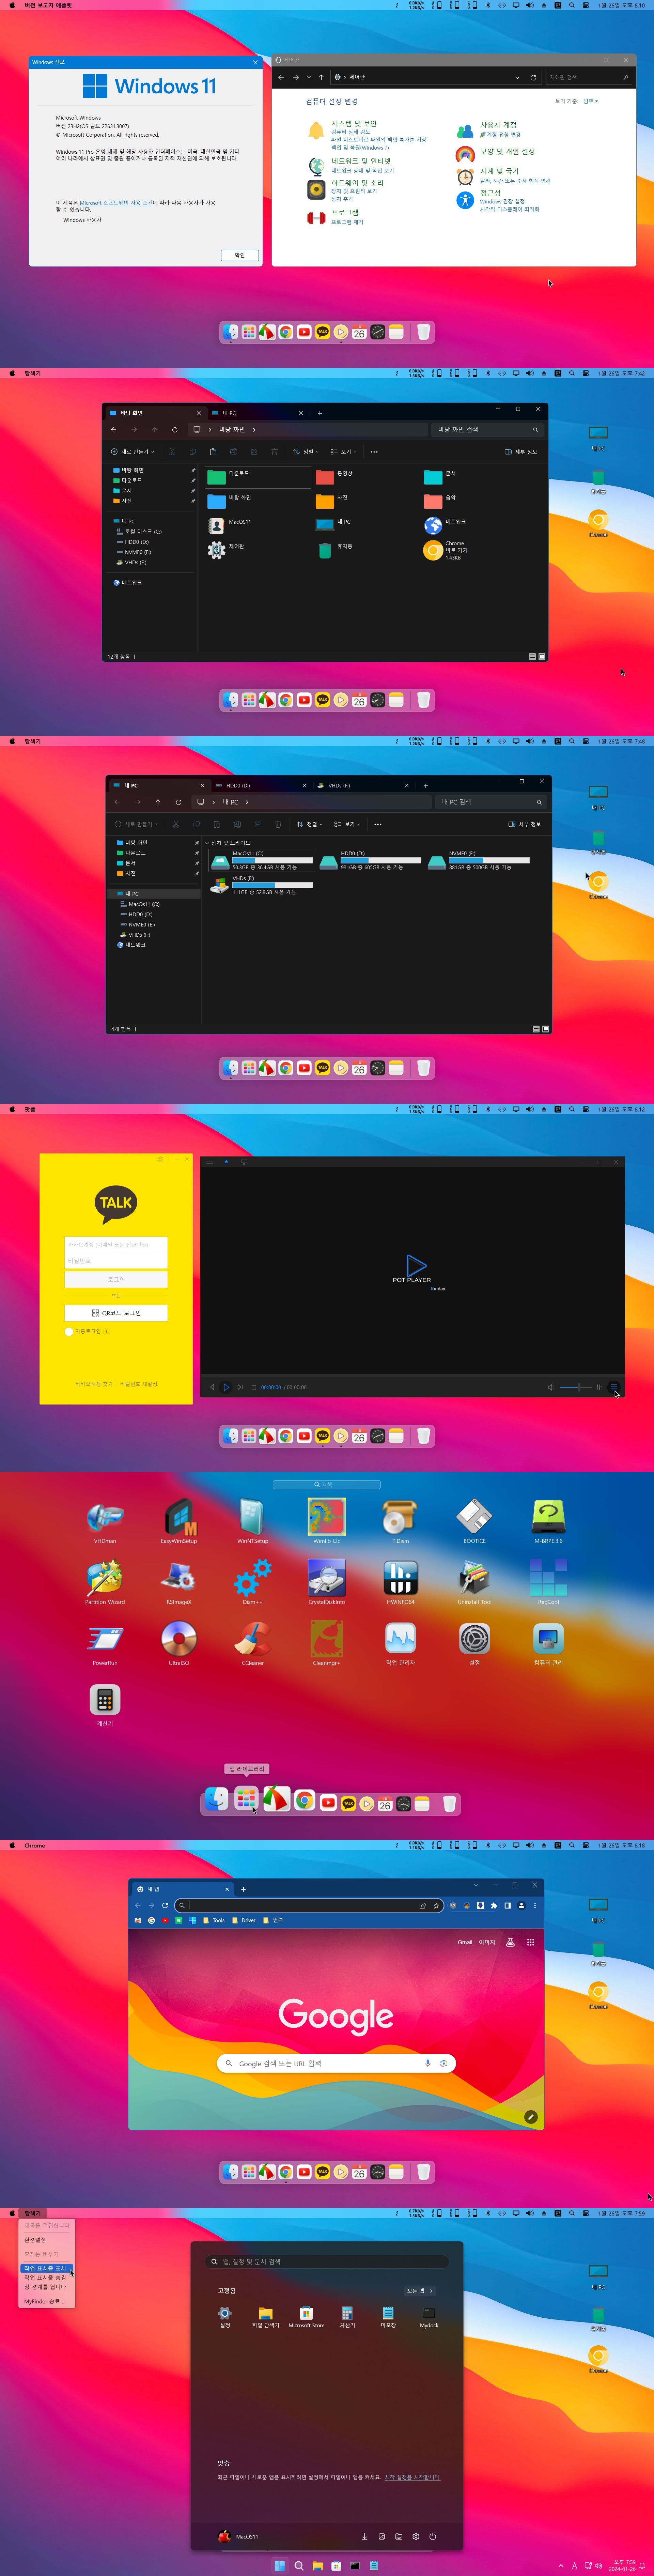 WinMacOS11s.jpg